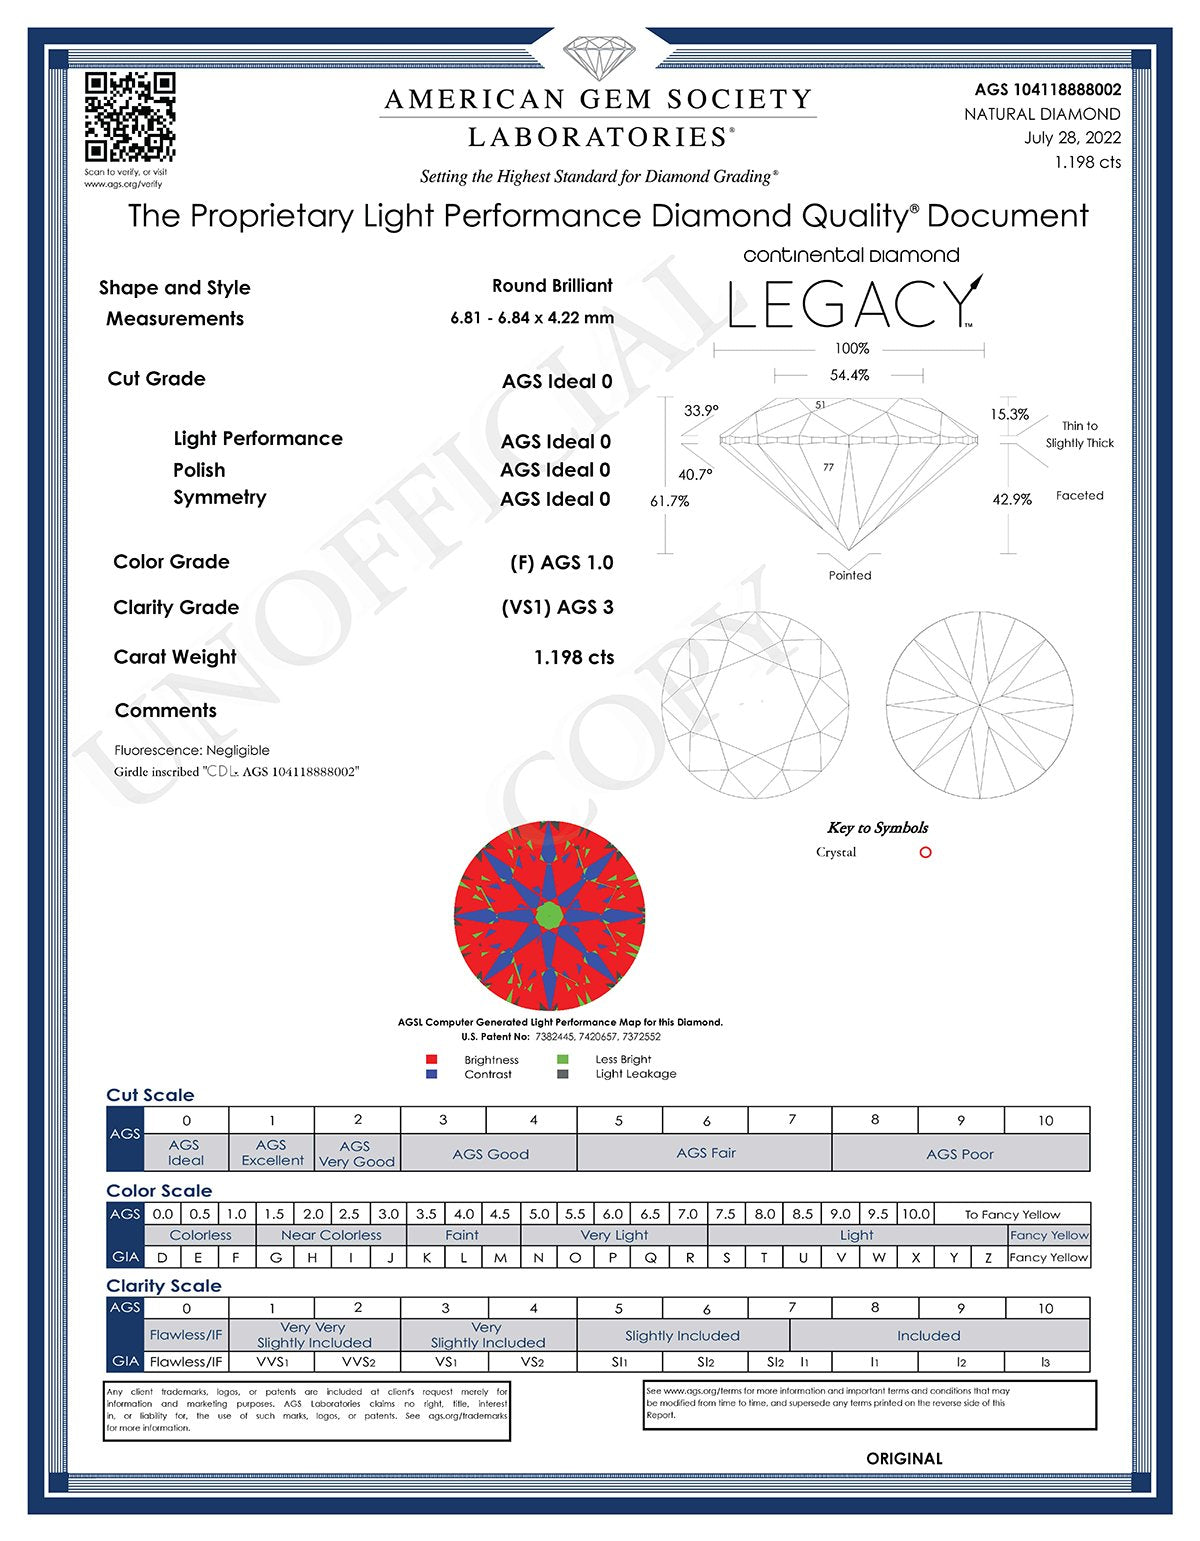 1.19 F/VS1 AGS LEGACY - Continental Diamond